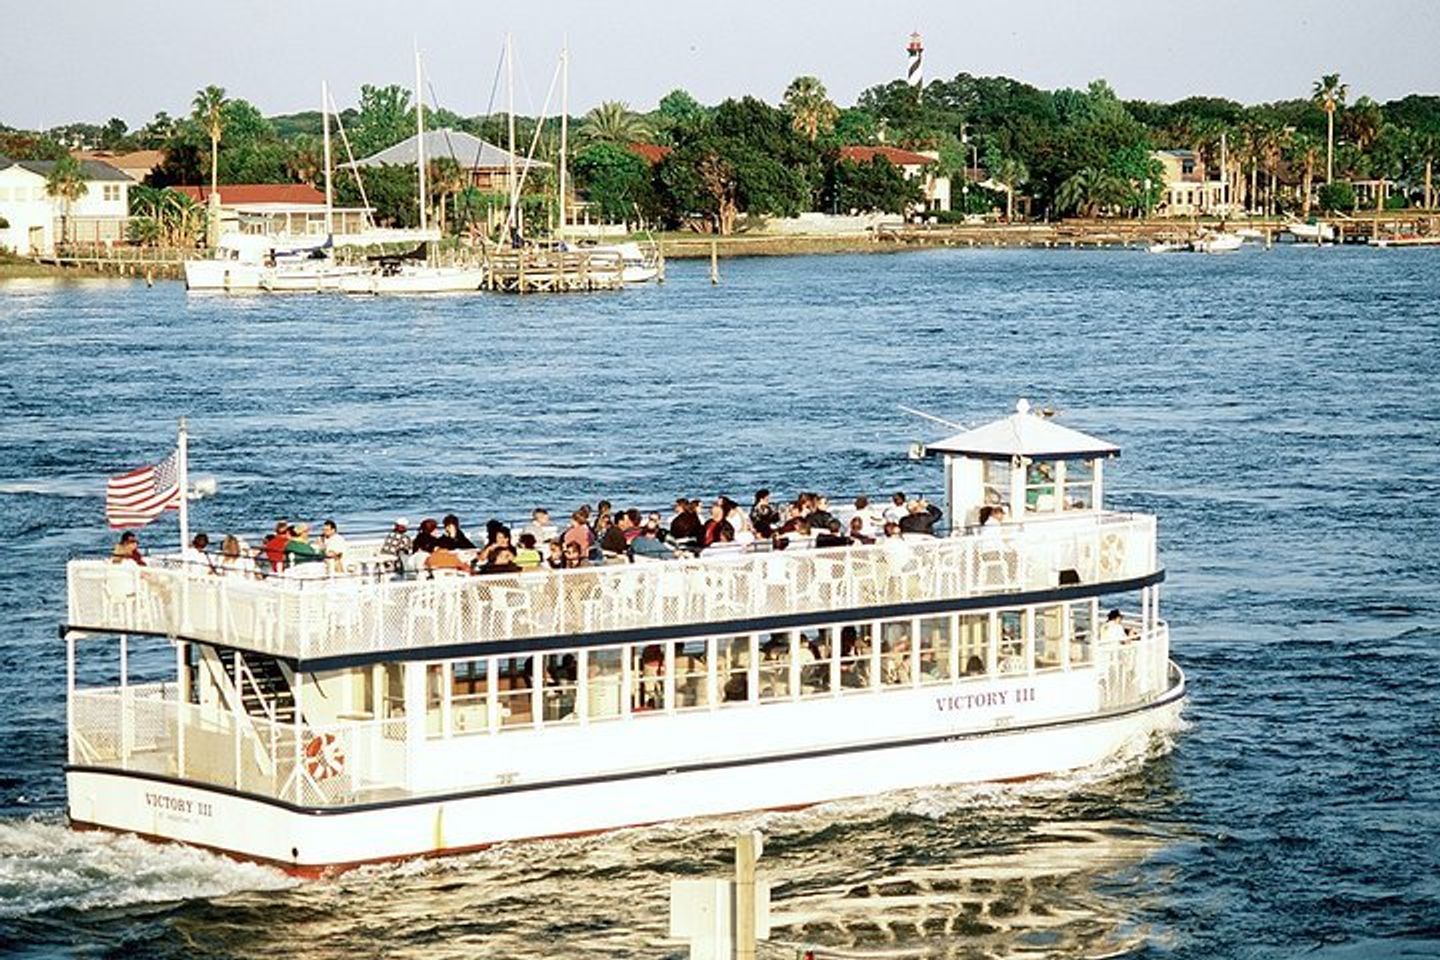 Take a boat tour of the Vivari Channel